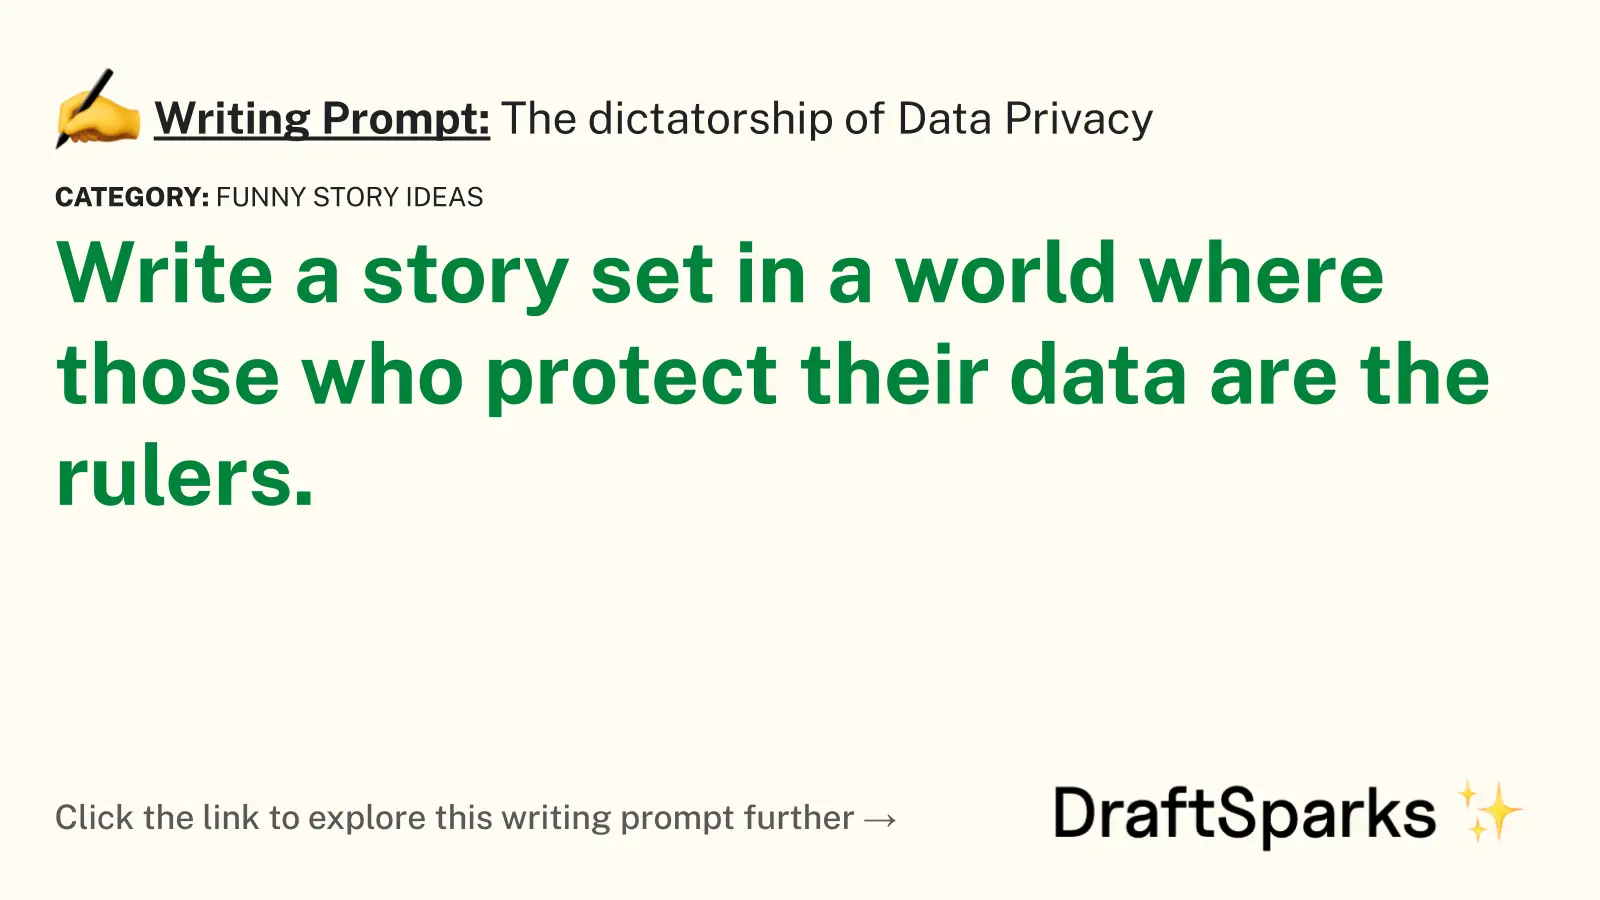 The dictatorship of Data Privacy